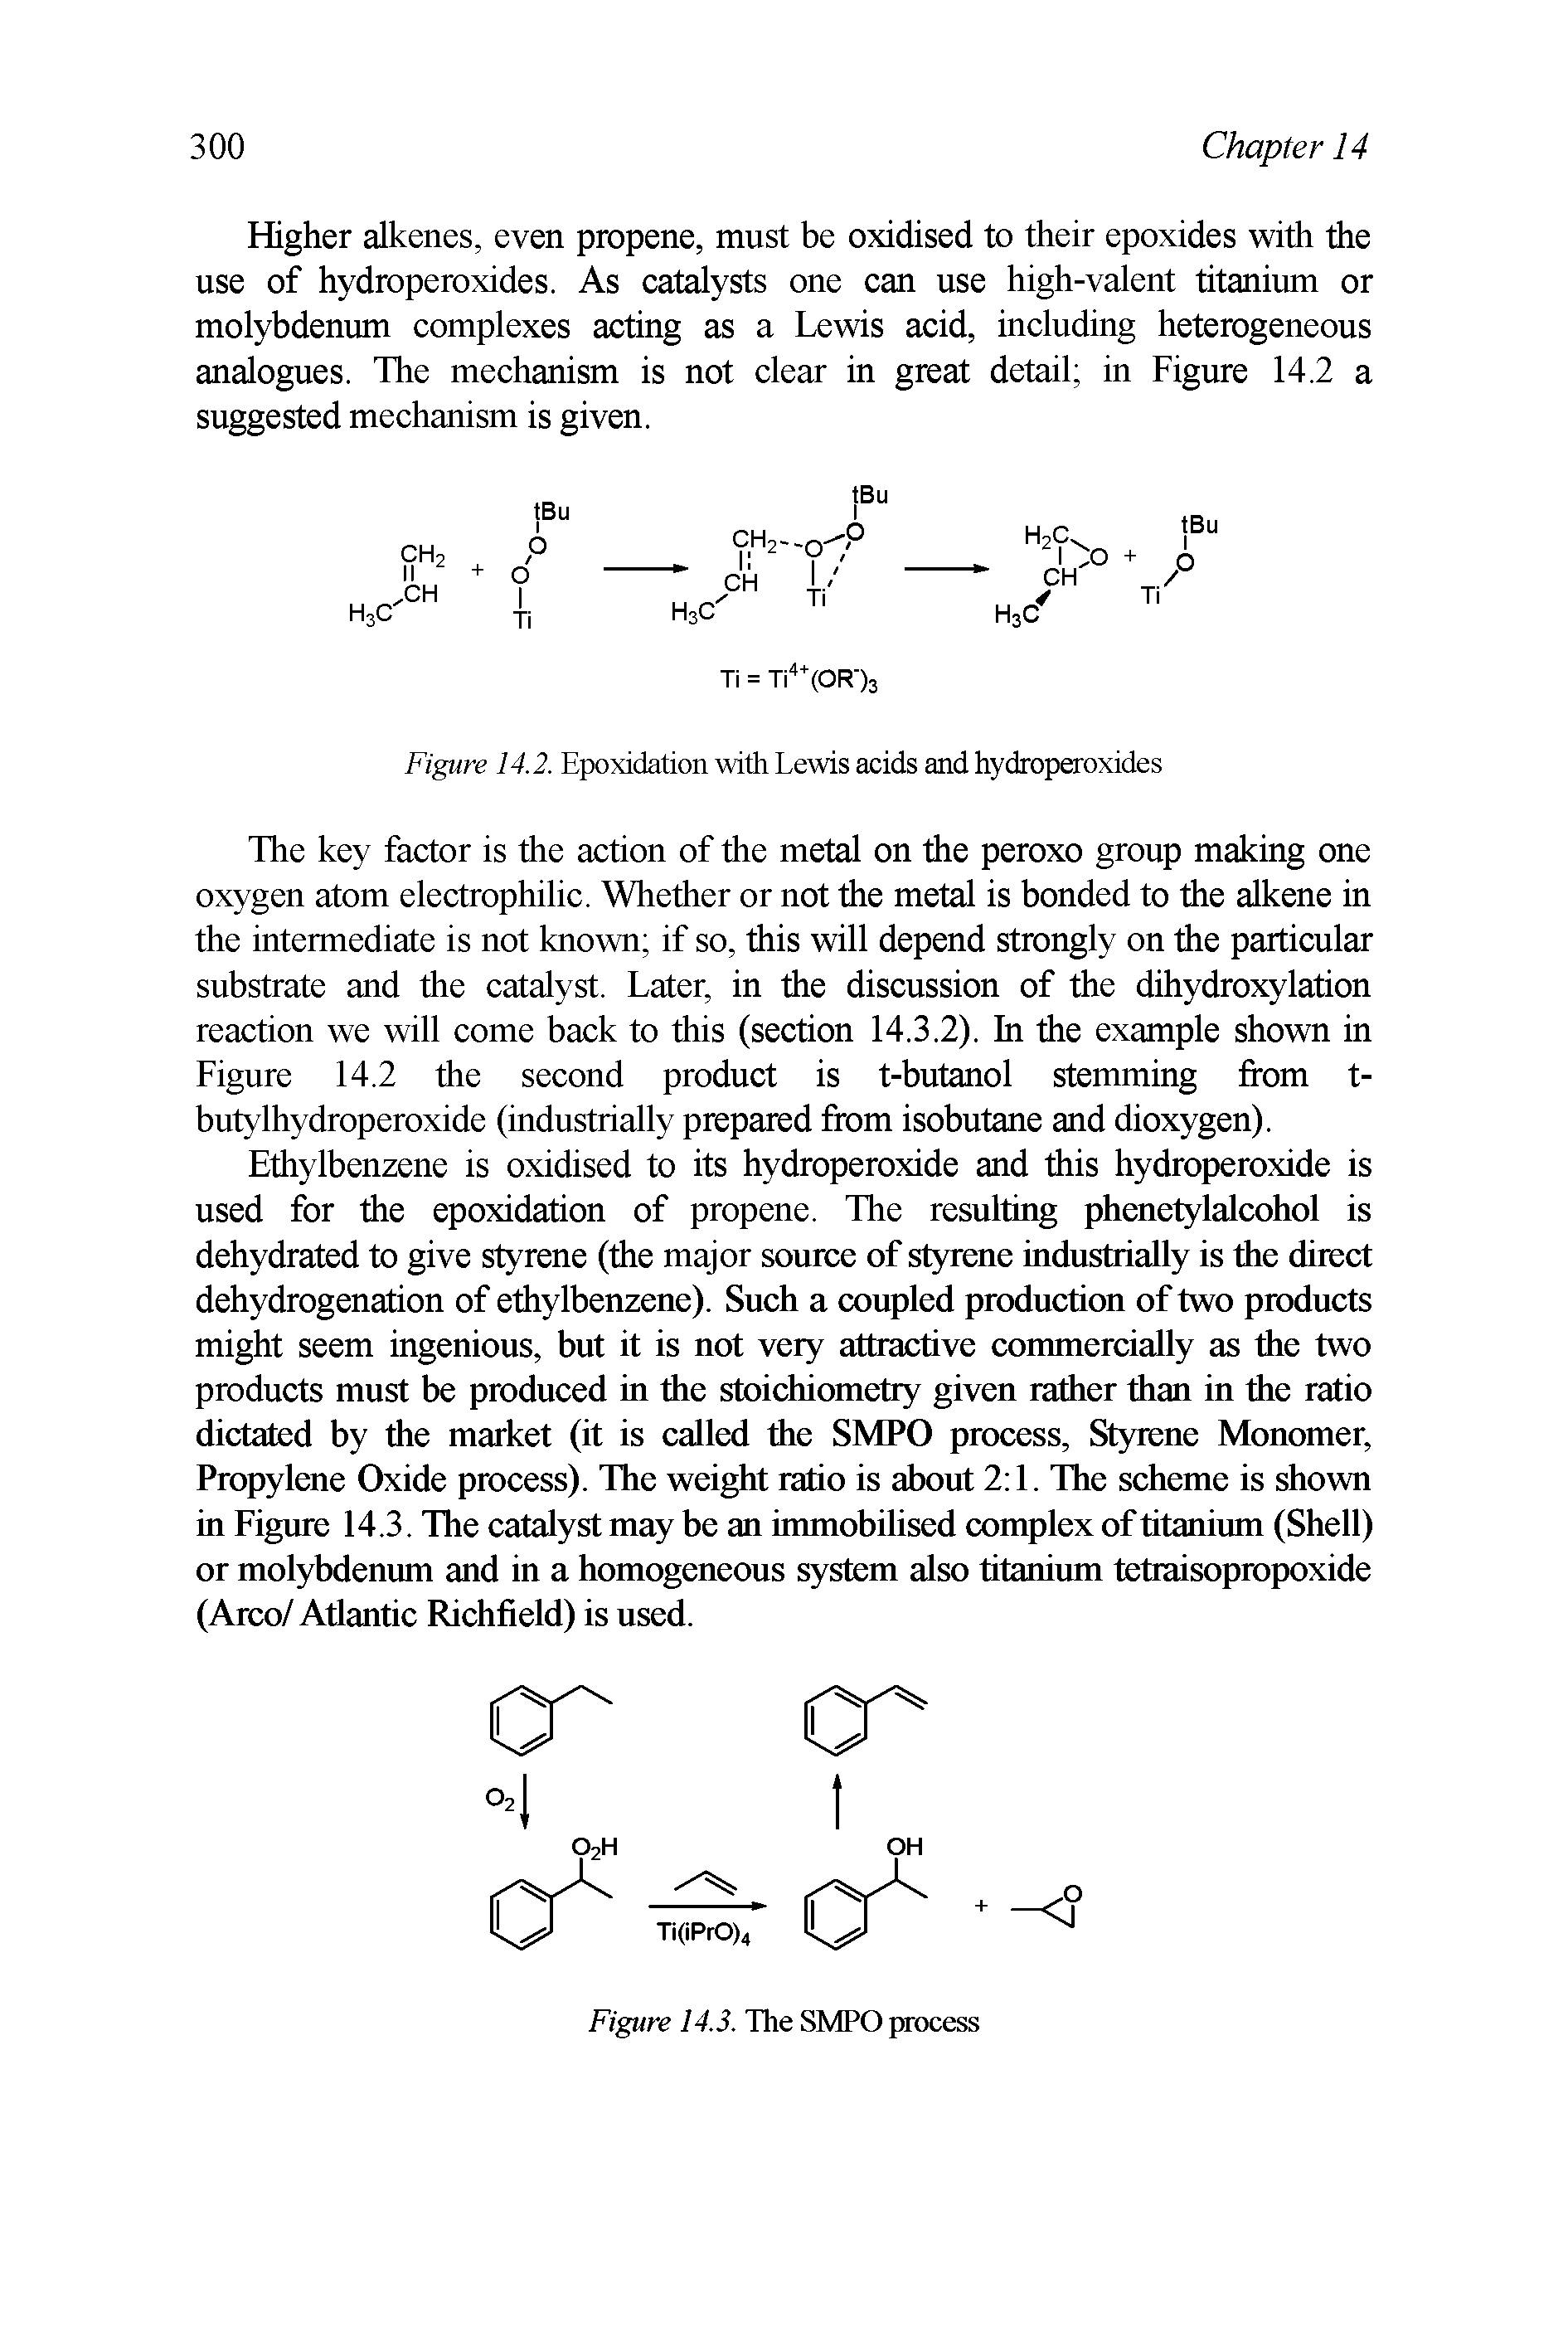 Figure 14.2. Epoxidation with Lewis acids and hydroperoxides...